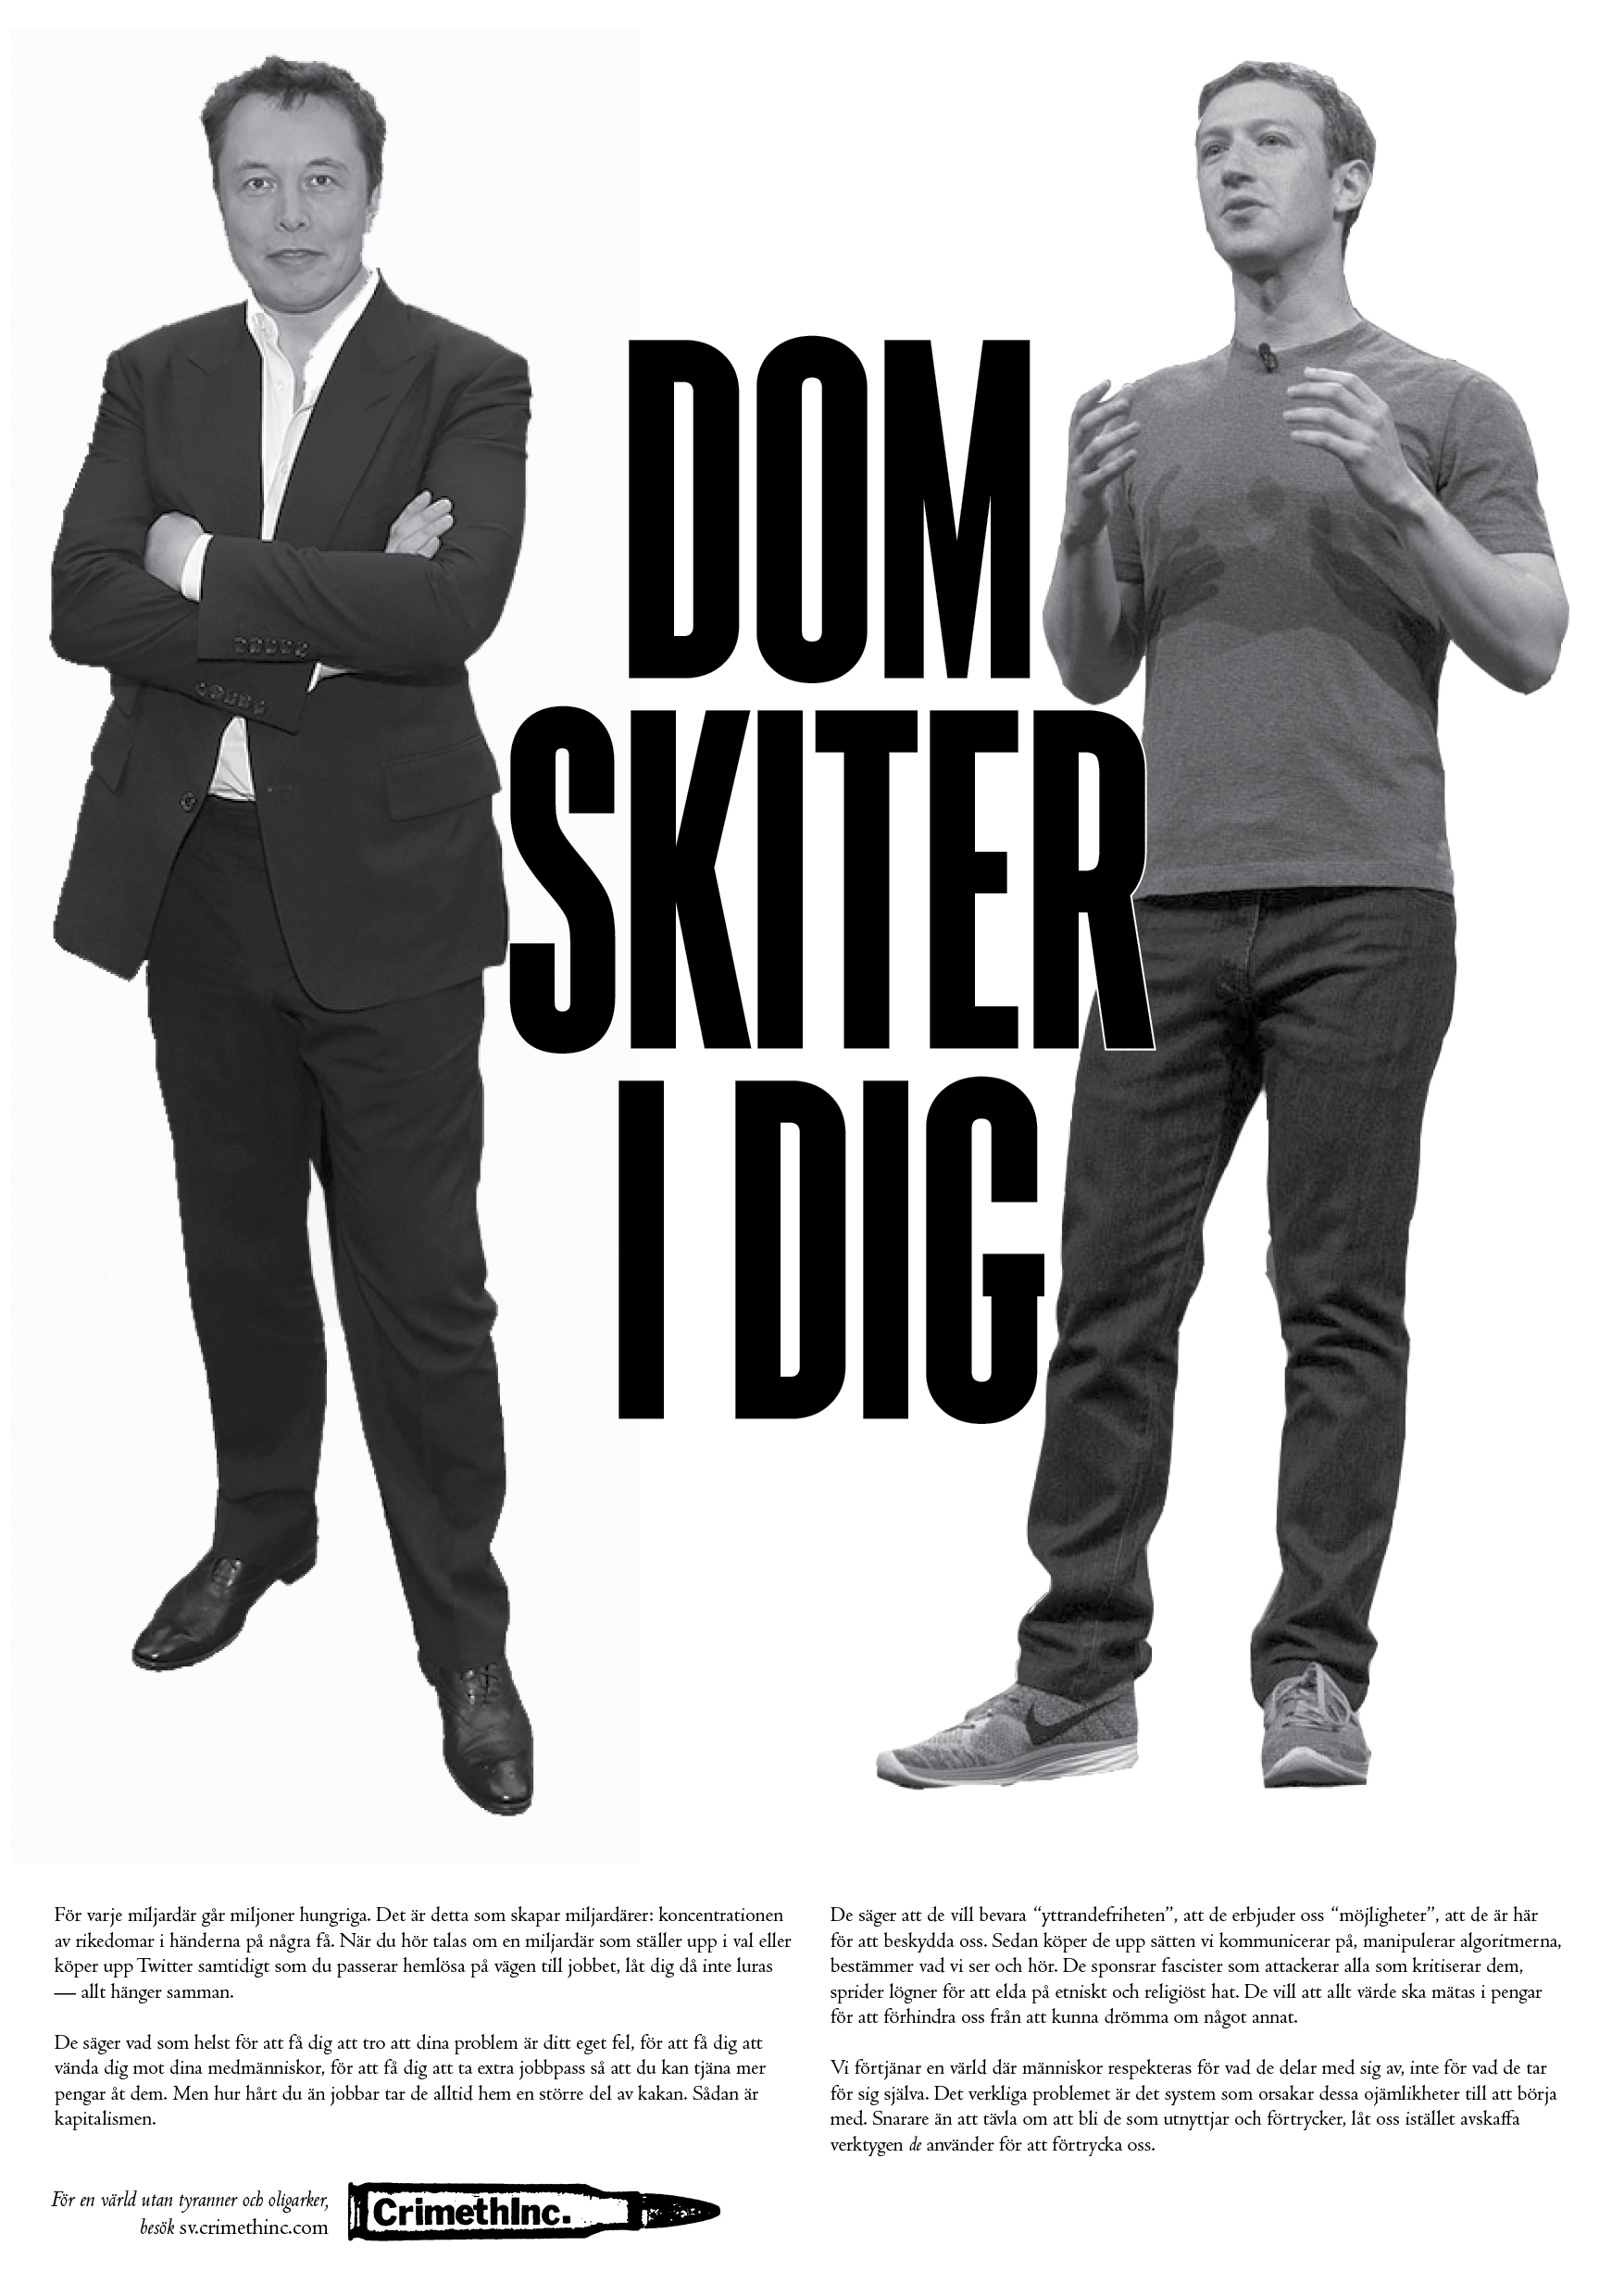 Photo of ‘Dom skiter i dig’ front side